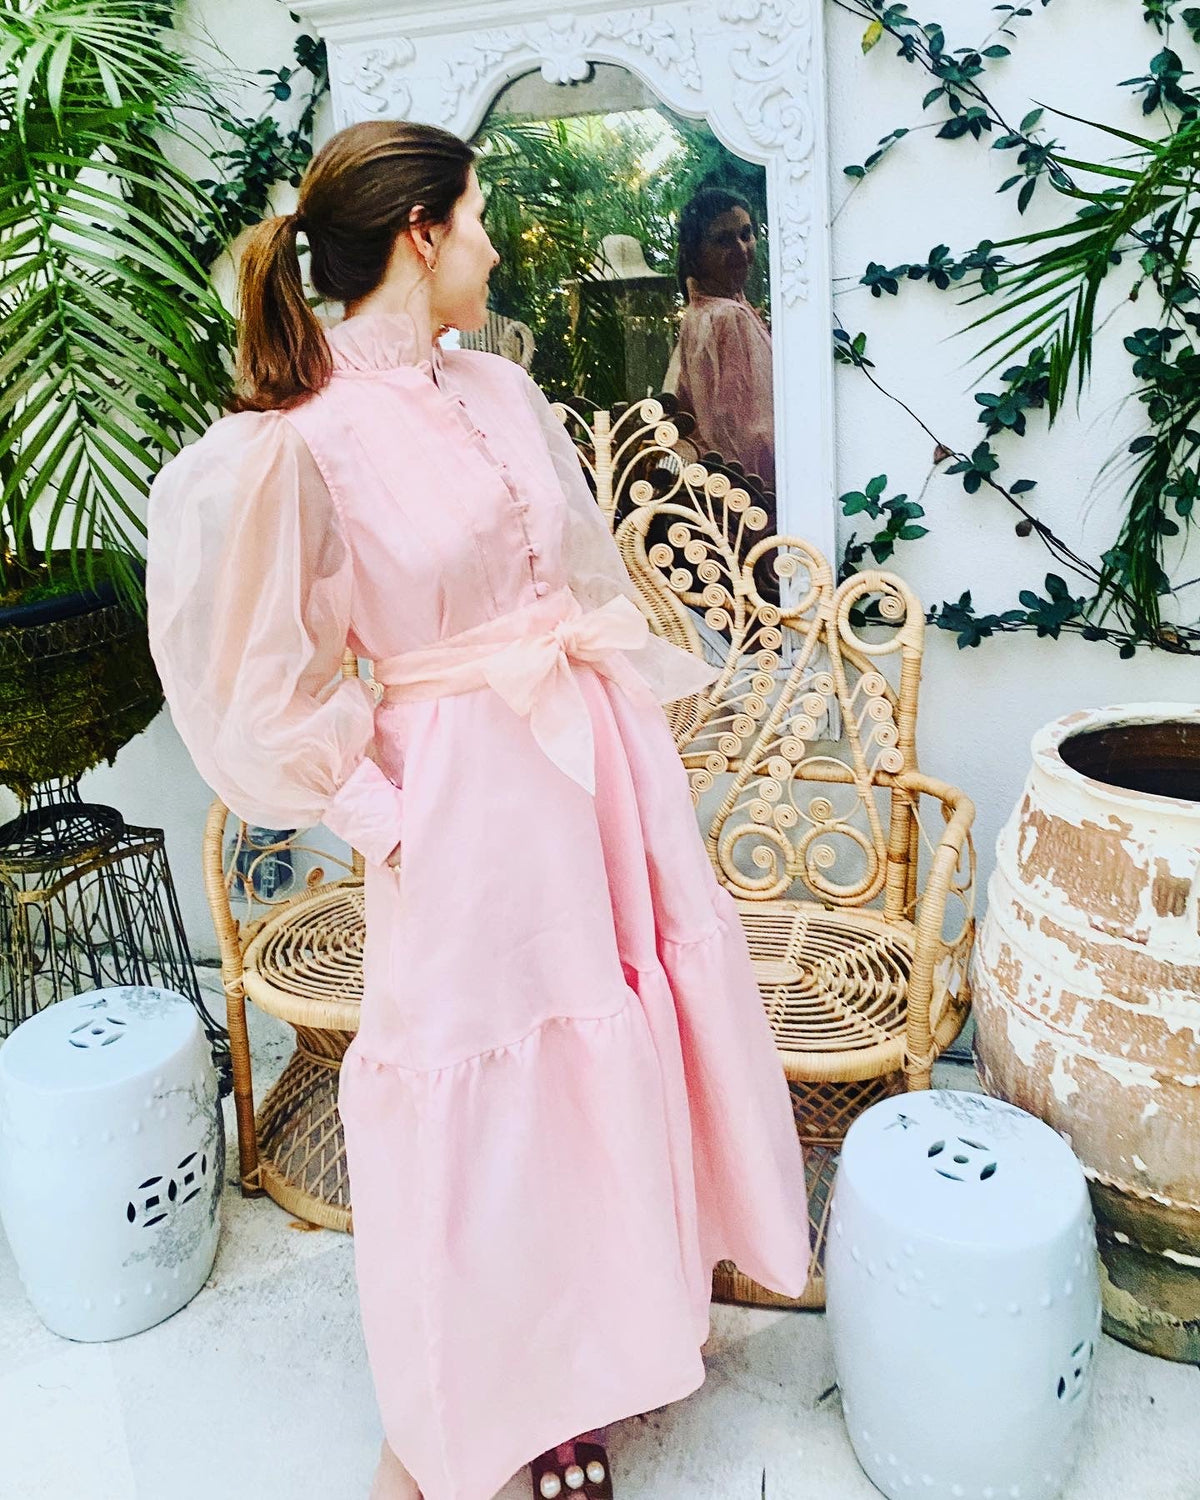 Athenee Dress in Pink Silk Organza